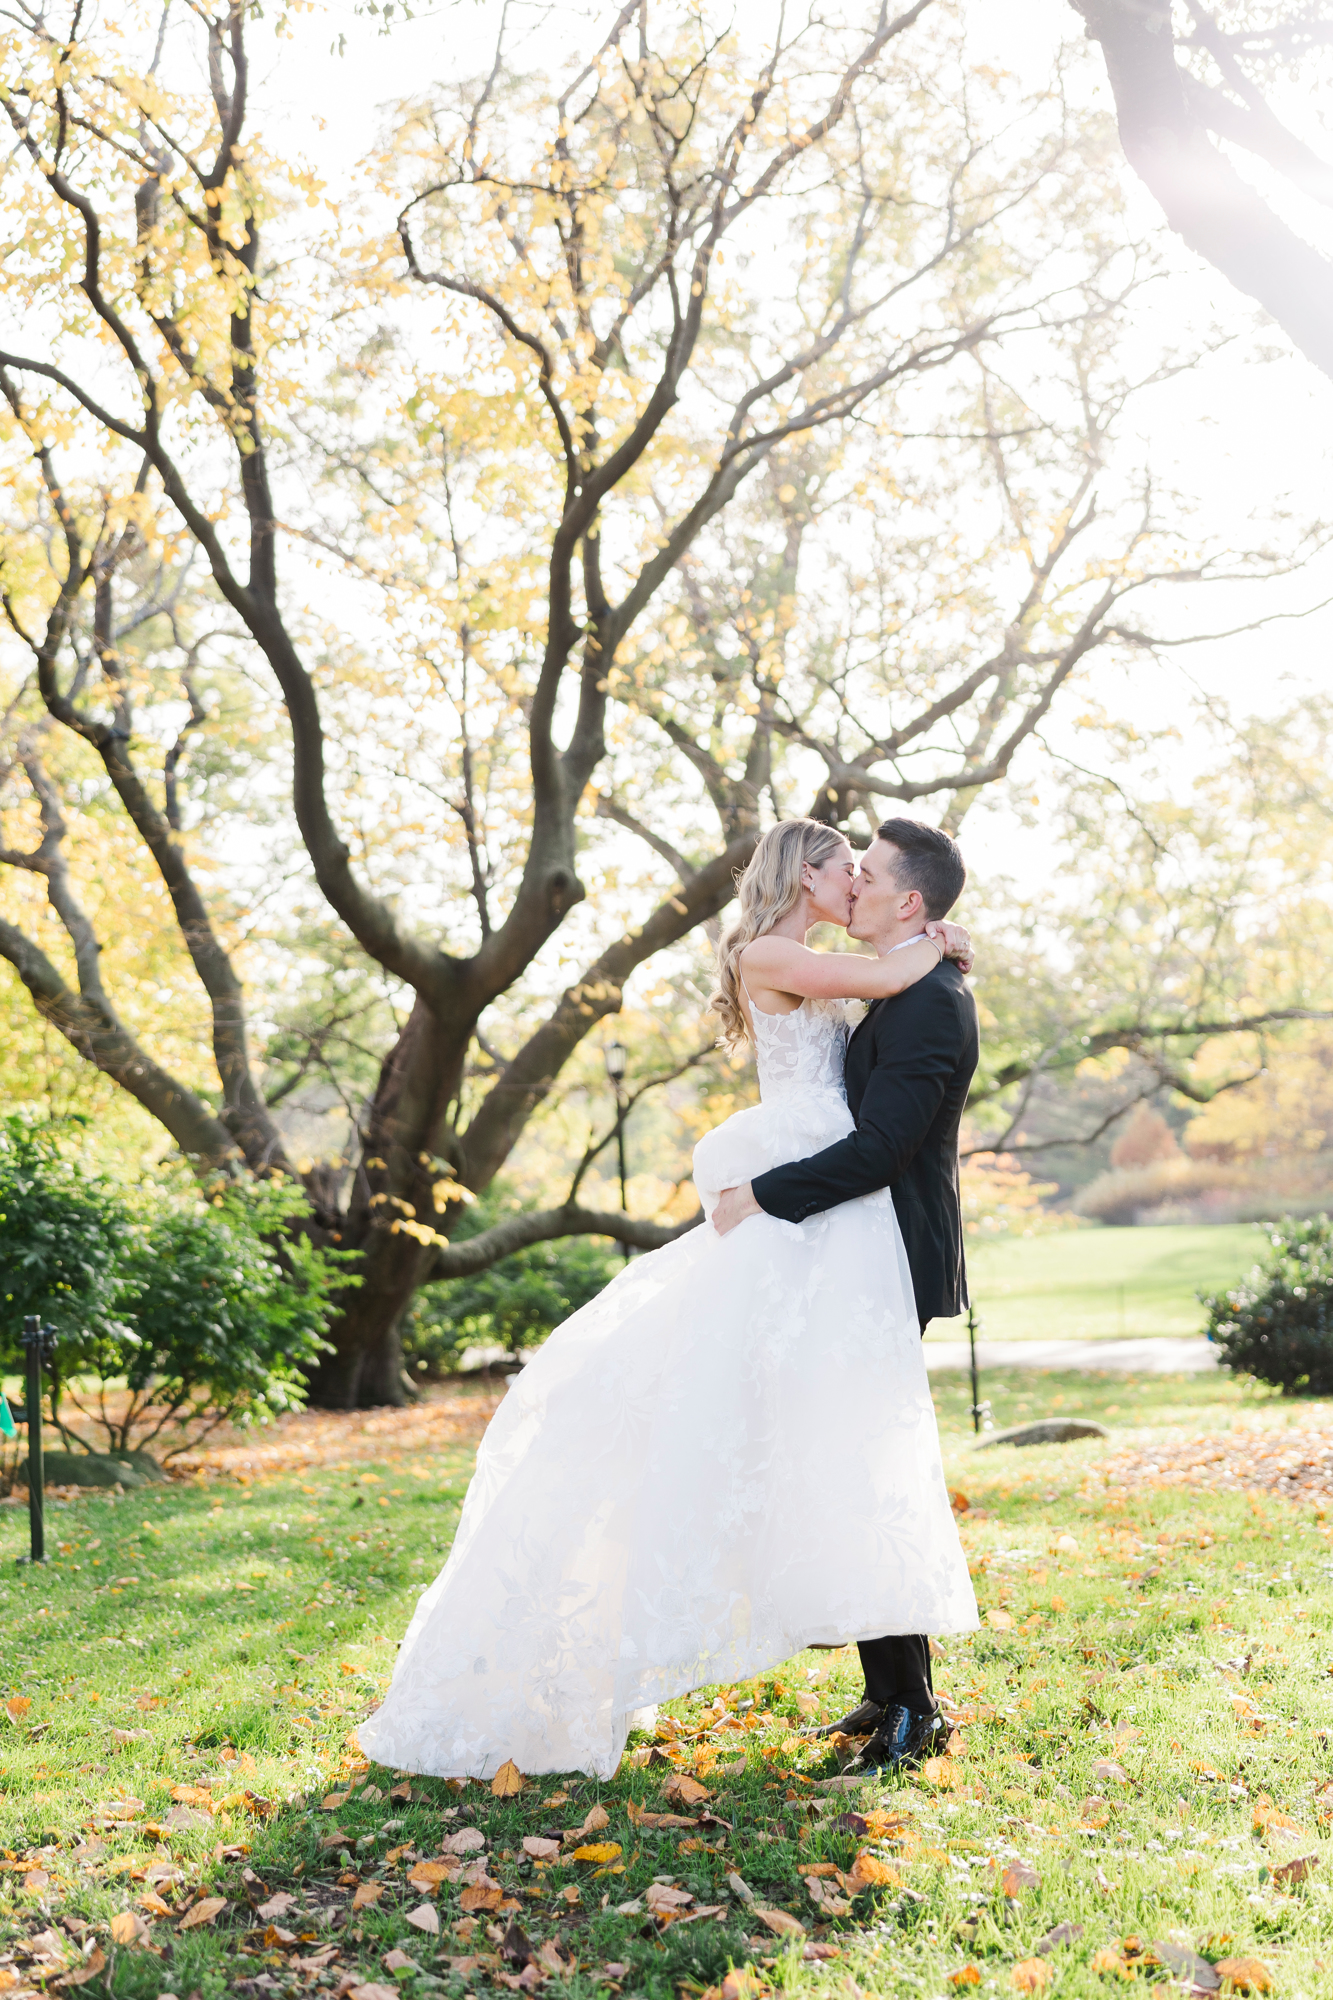 Authentic Brooklyn Botanic Garden Wedding in Autumn